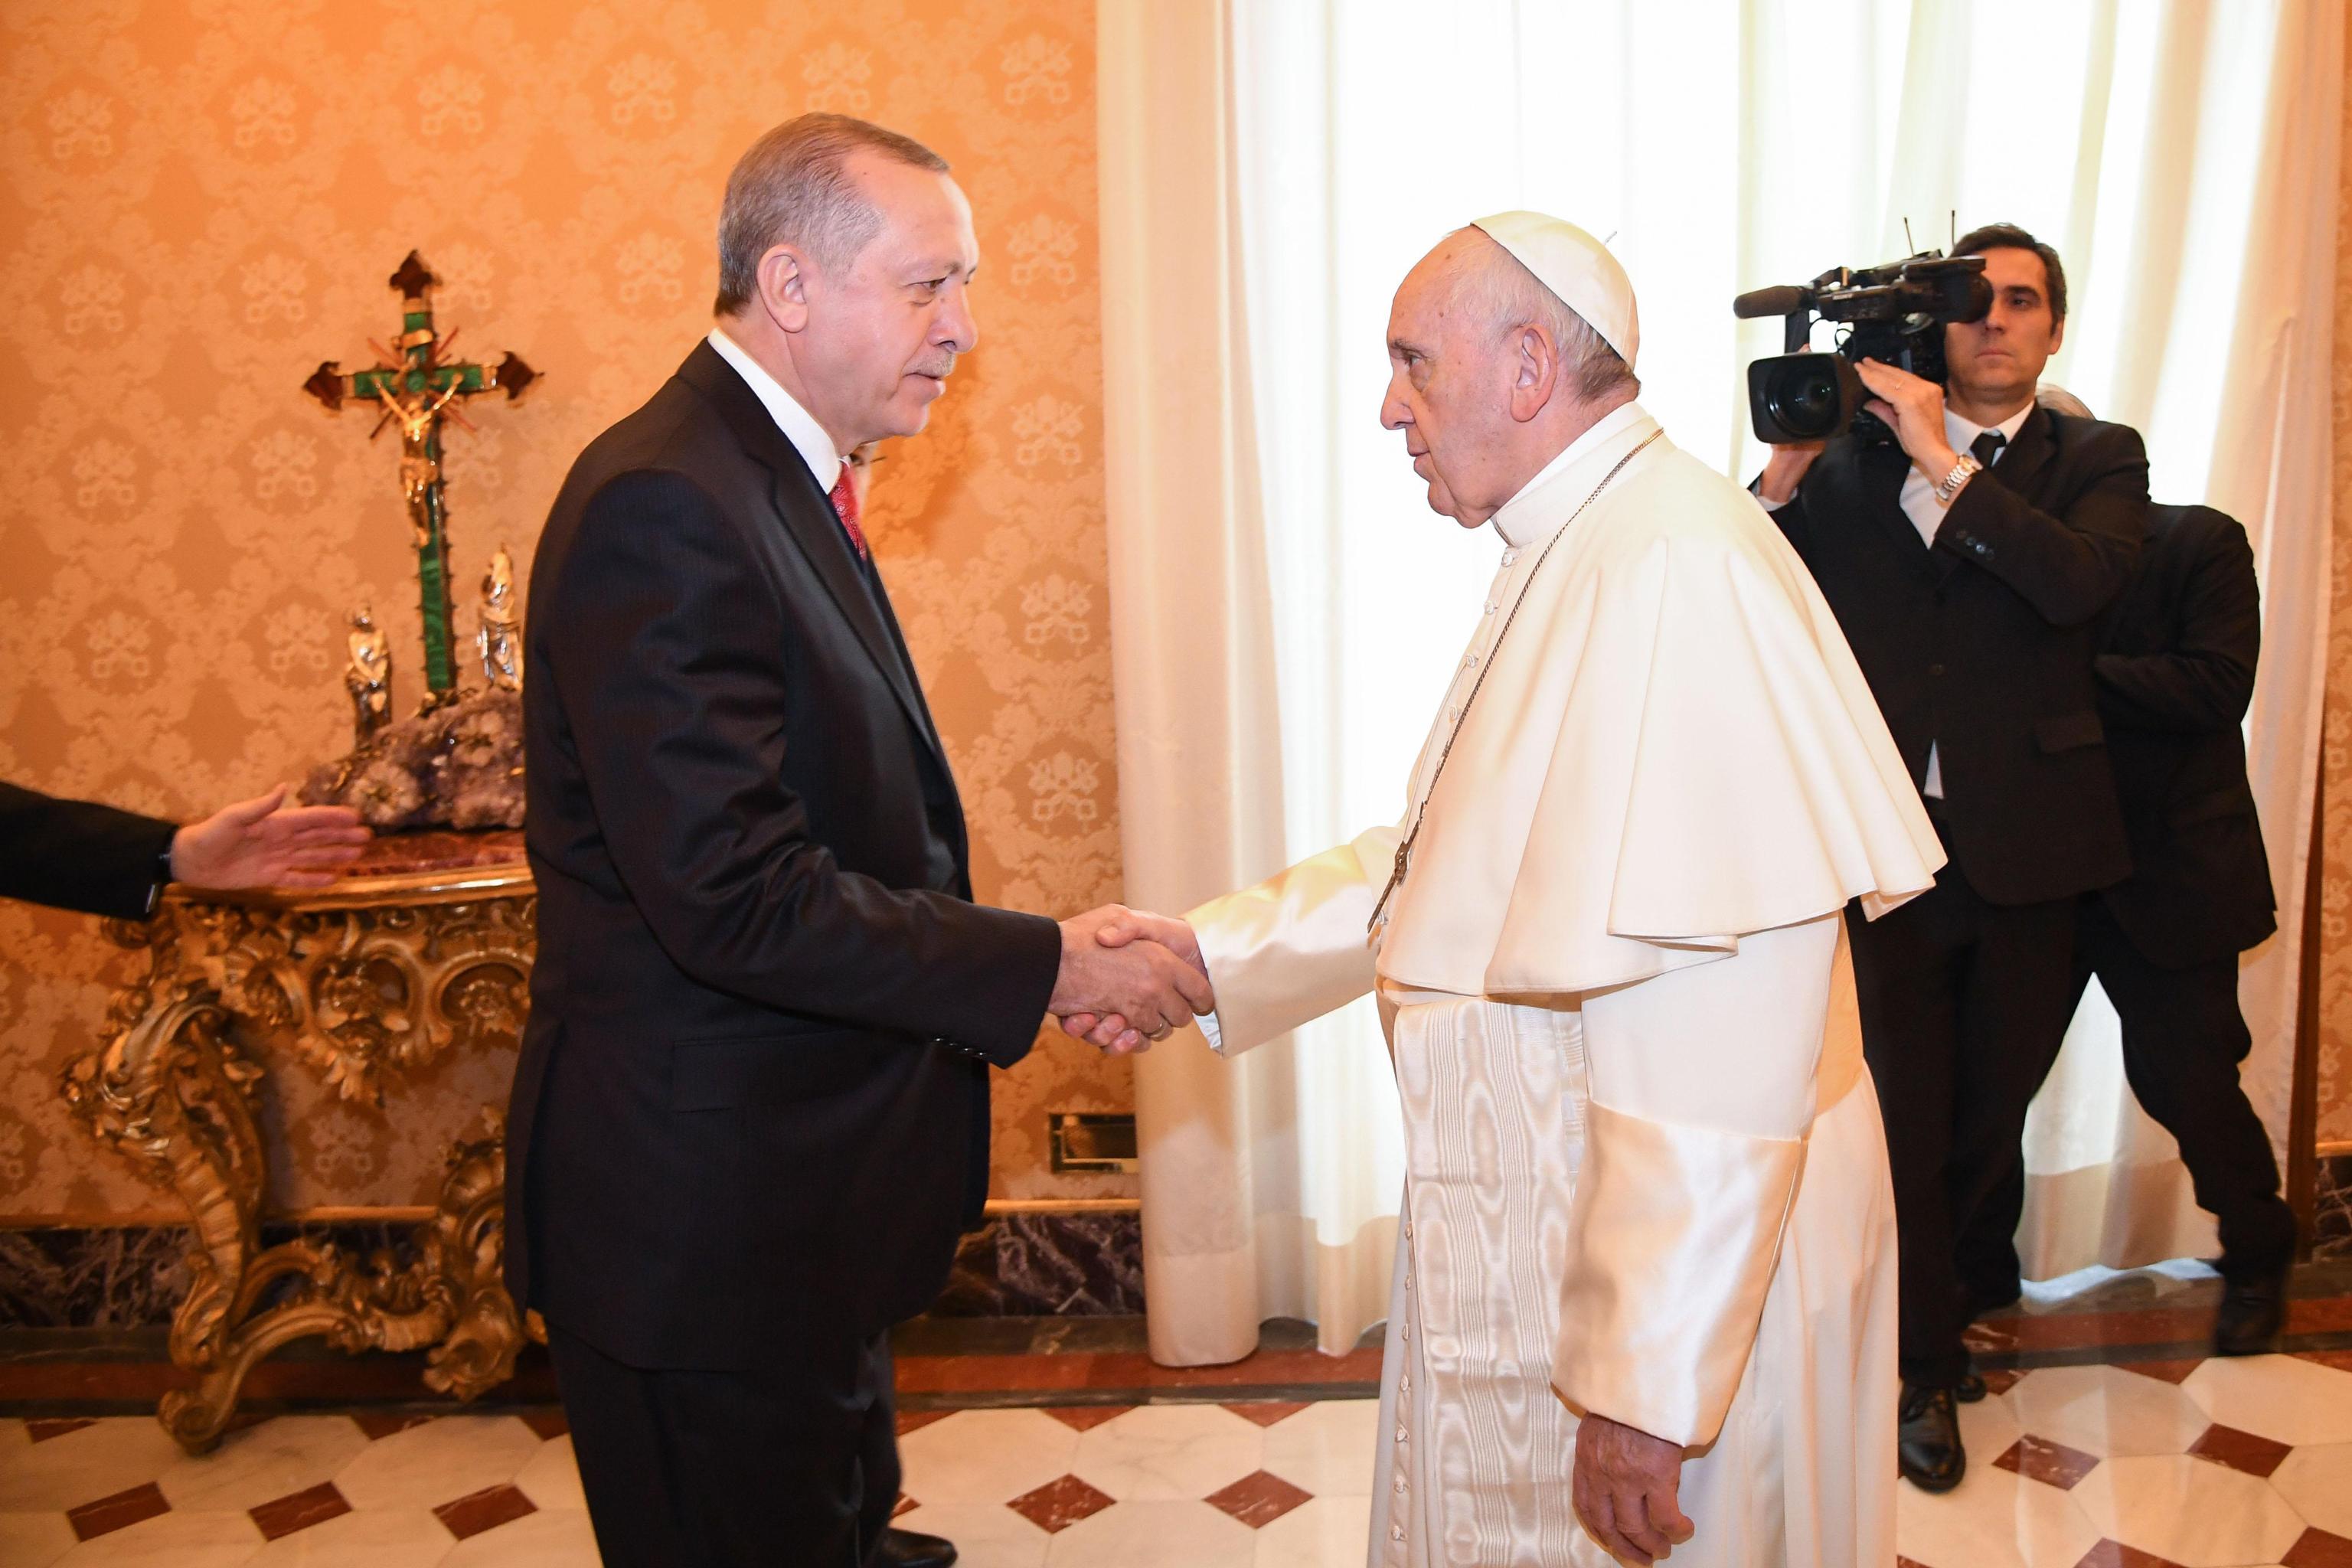 Stretta di mano all’arrivo di Erdogan in Vaticano